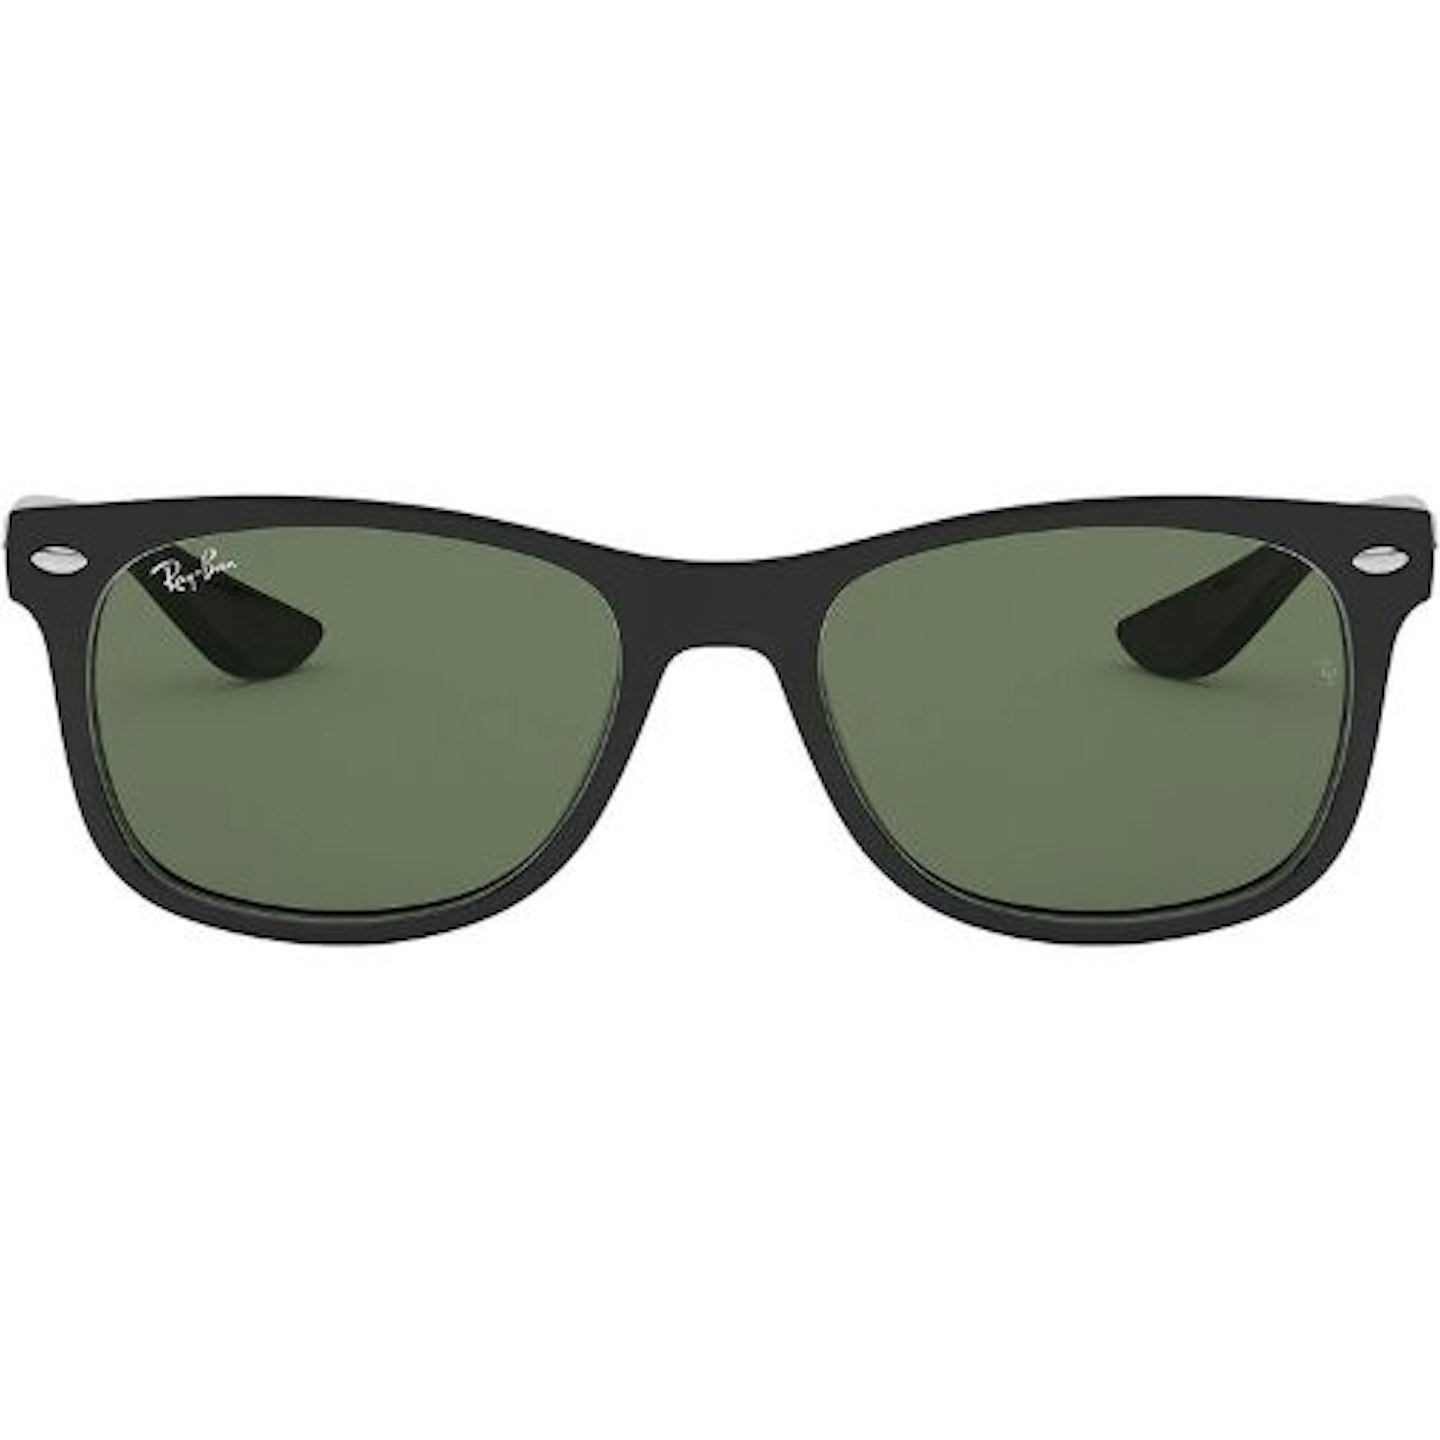 Best kids' sunglasses: Ray-Ban Unisex Kid's New Wayfarer Junior Sunglasses